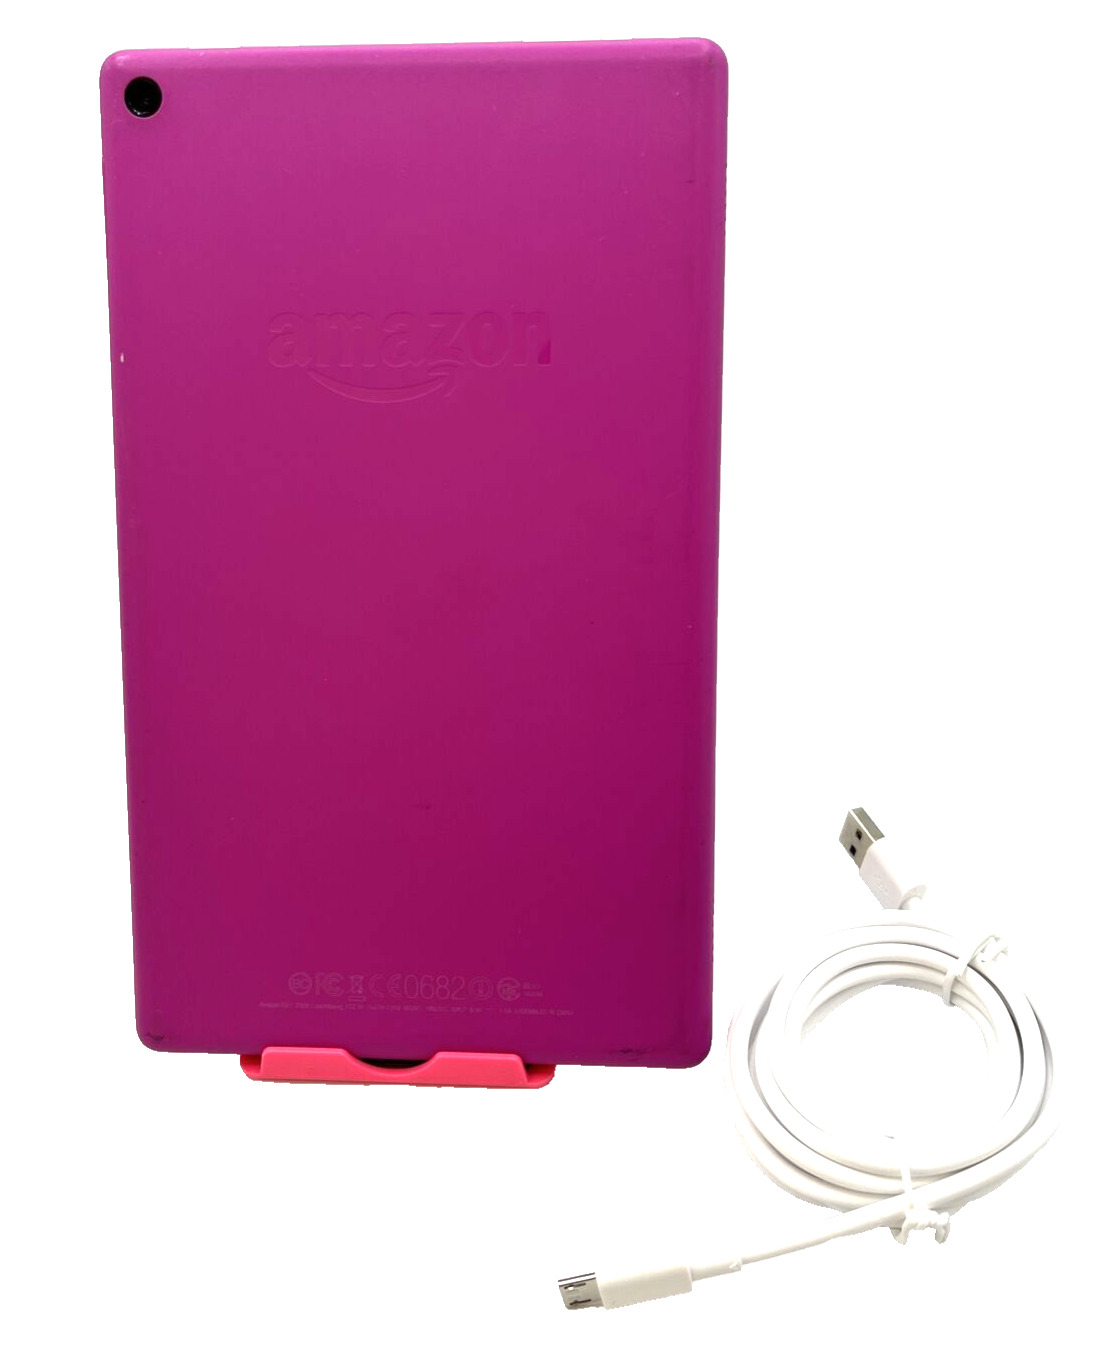 Amazon Kindle Fire HD 8 6th Generation 16GB WiFi 8in Pink PR53DC W/CHGR CBL ⚡⚡🔌